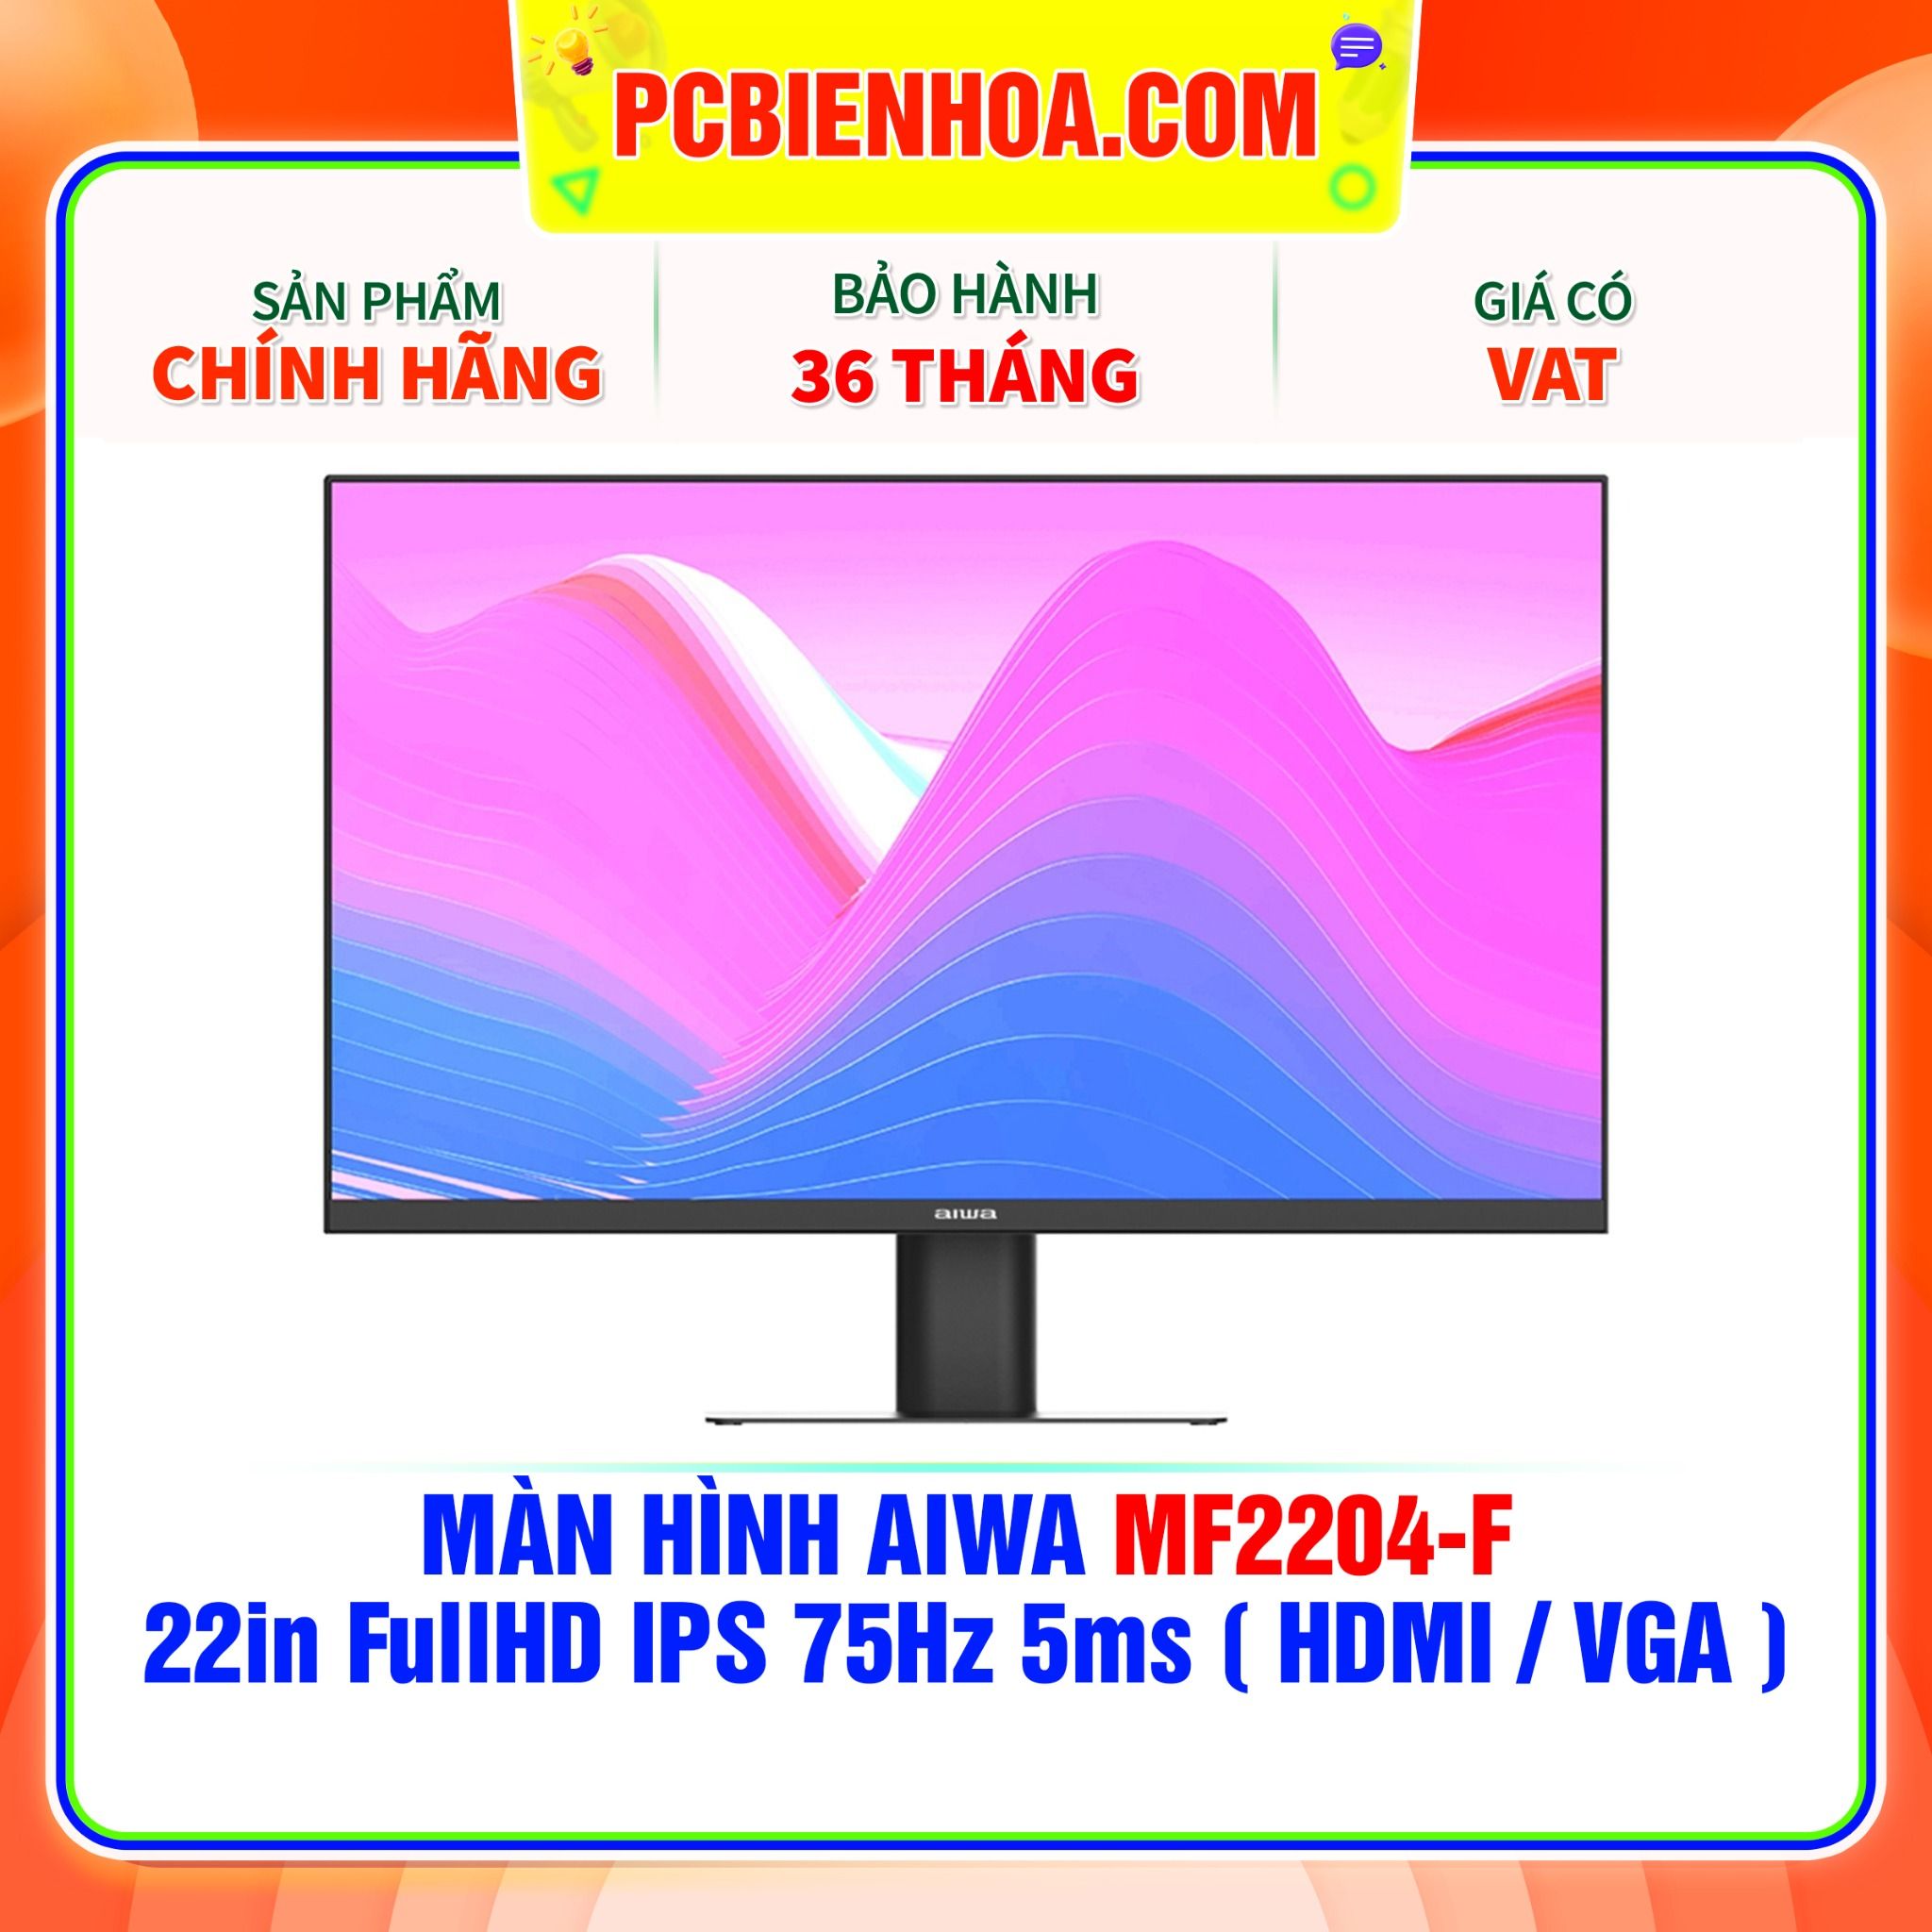  MÀN HÌNH AIWA MF2204-F 22in FullHD IPS 75Hz 5ms ( HDMI / VGA ) 